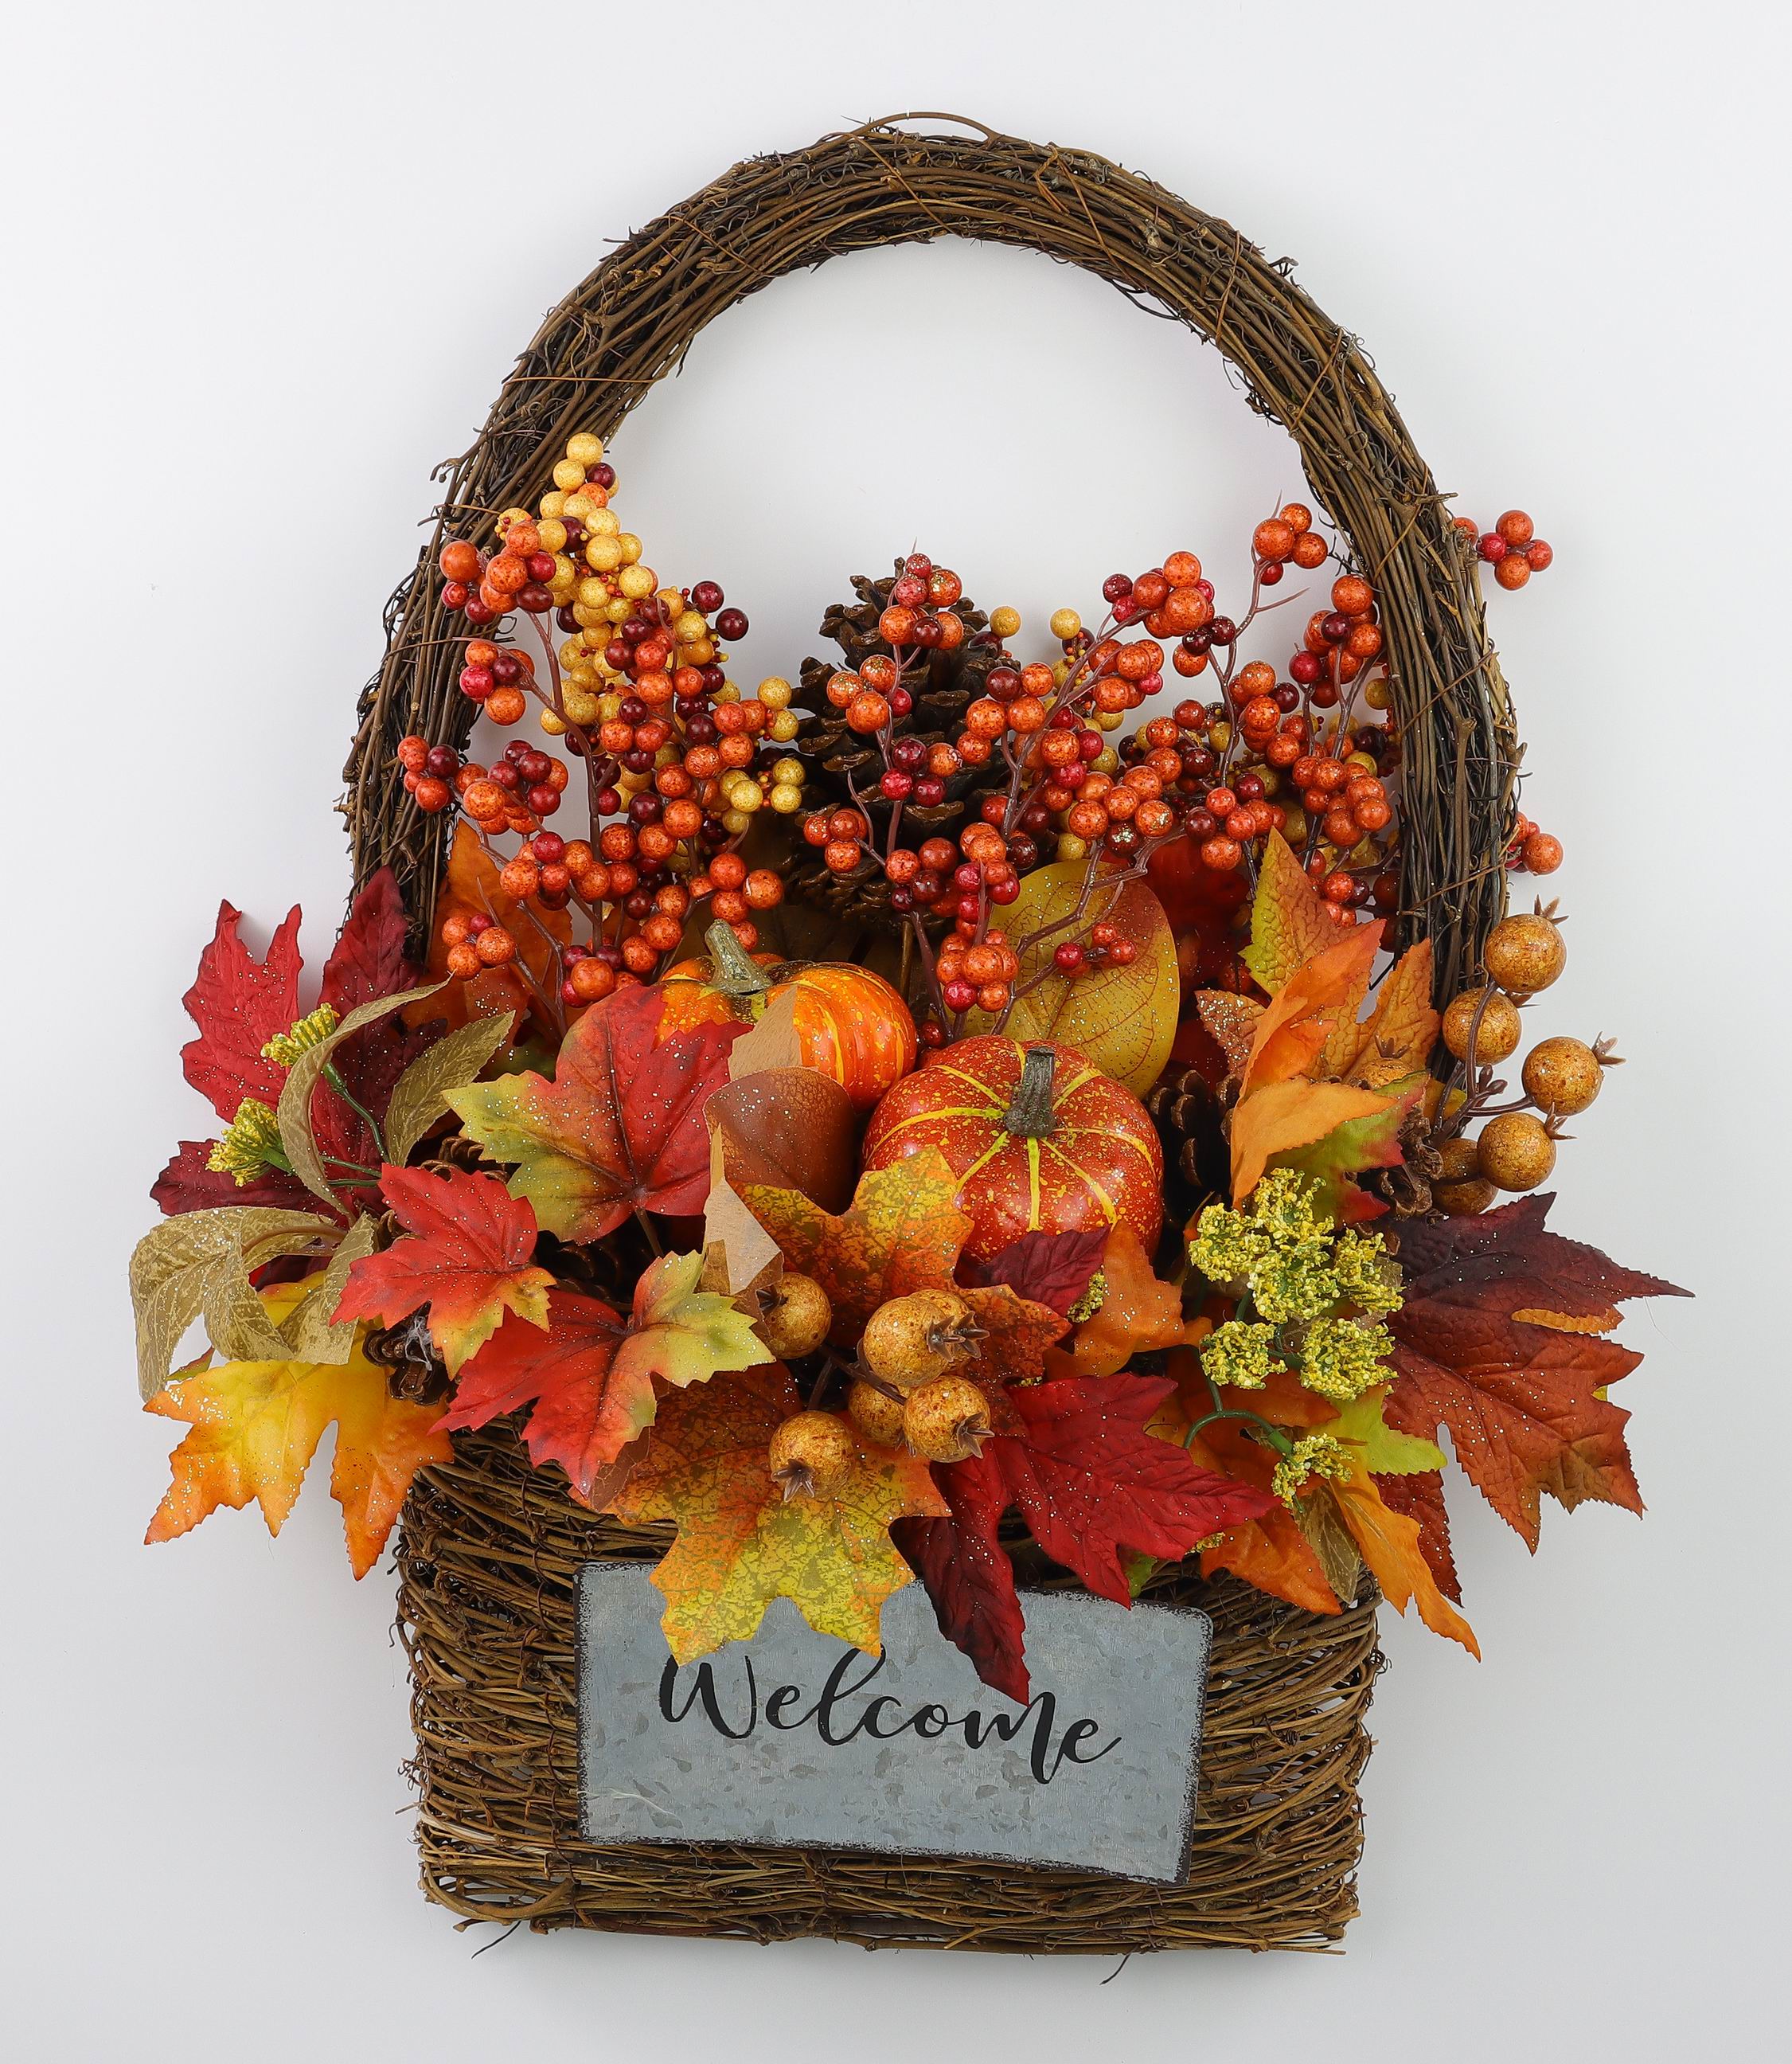 Way To Celebrate Basket Wreath Red Leaf - Walmart.com